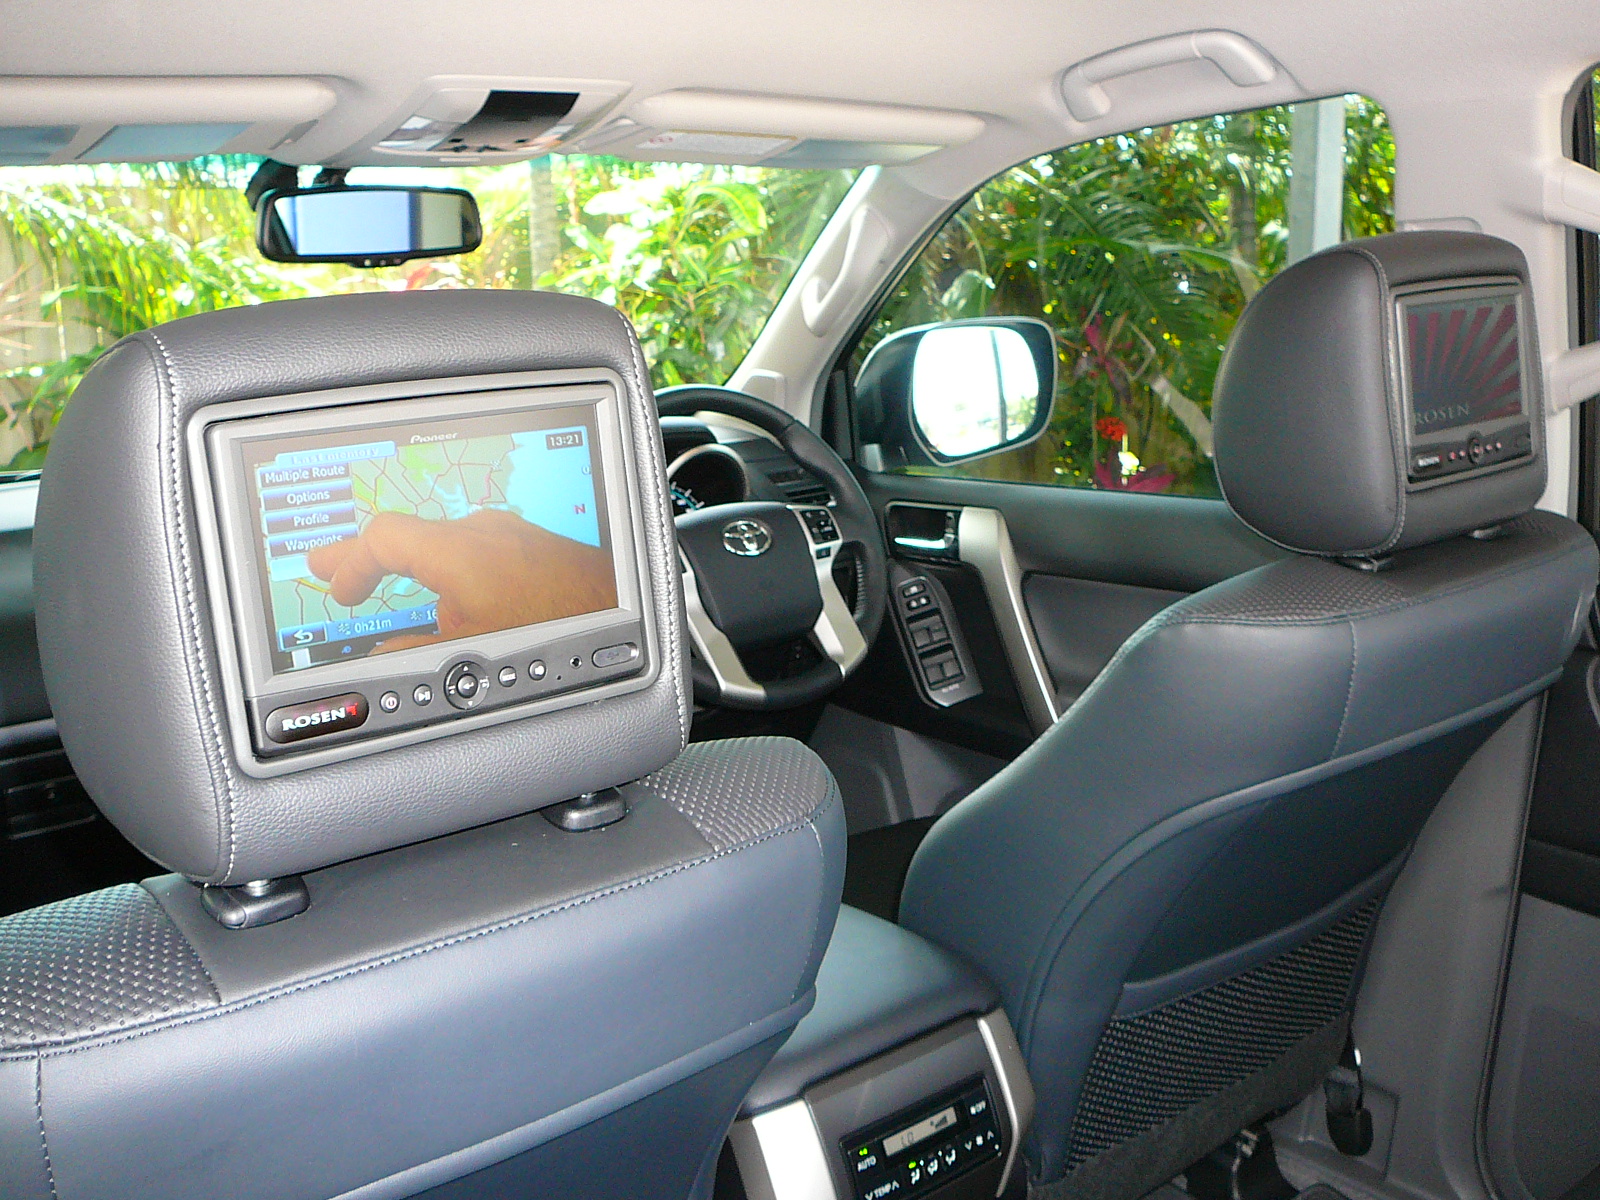 Toyota Prado 2012 Rosen Rear Seat Entertainment Headrest Screens